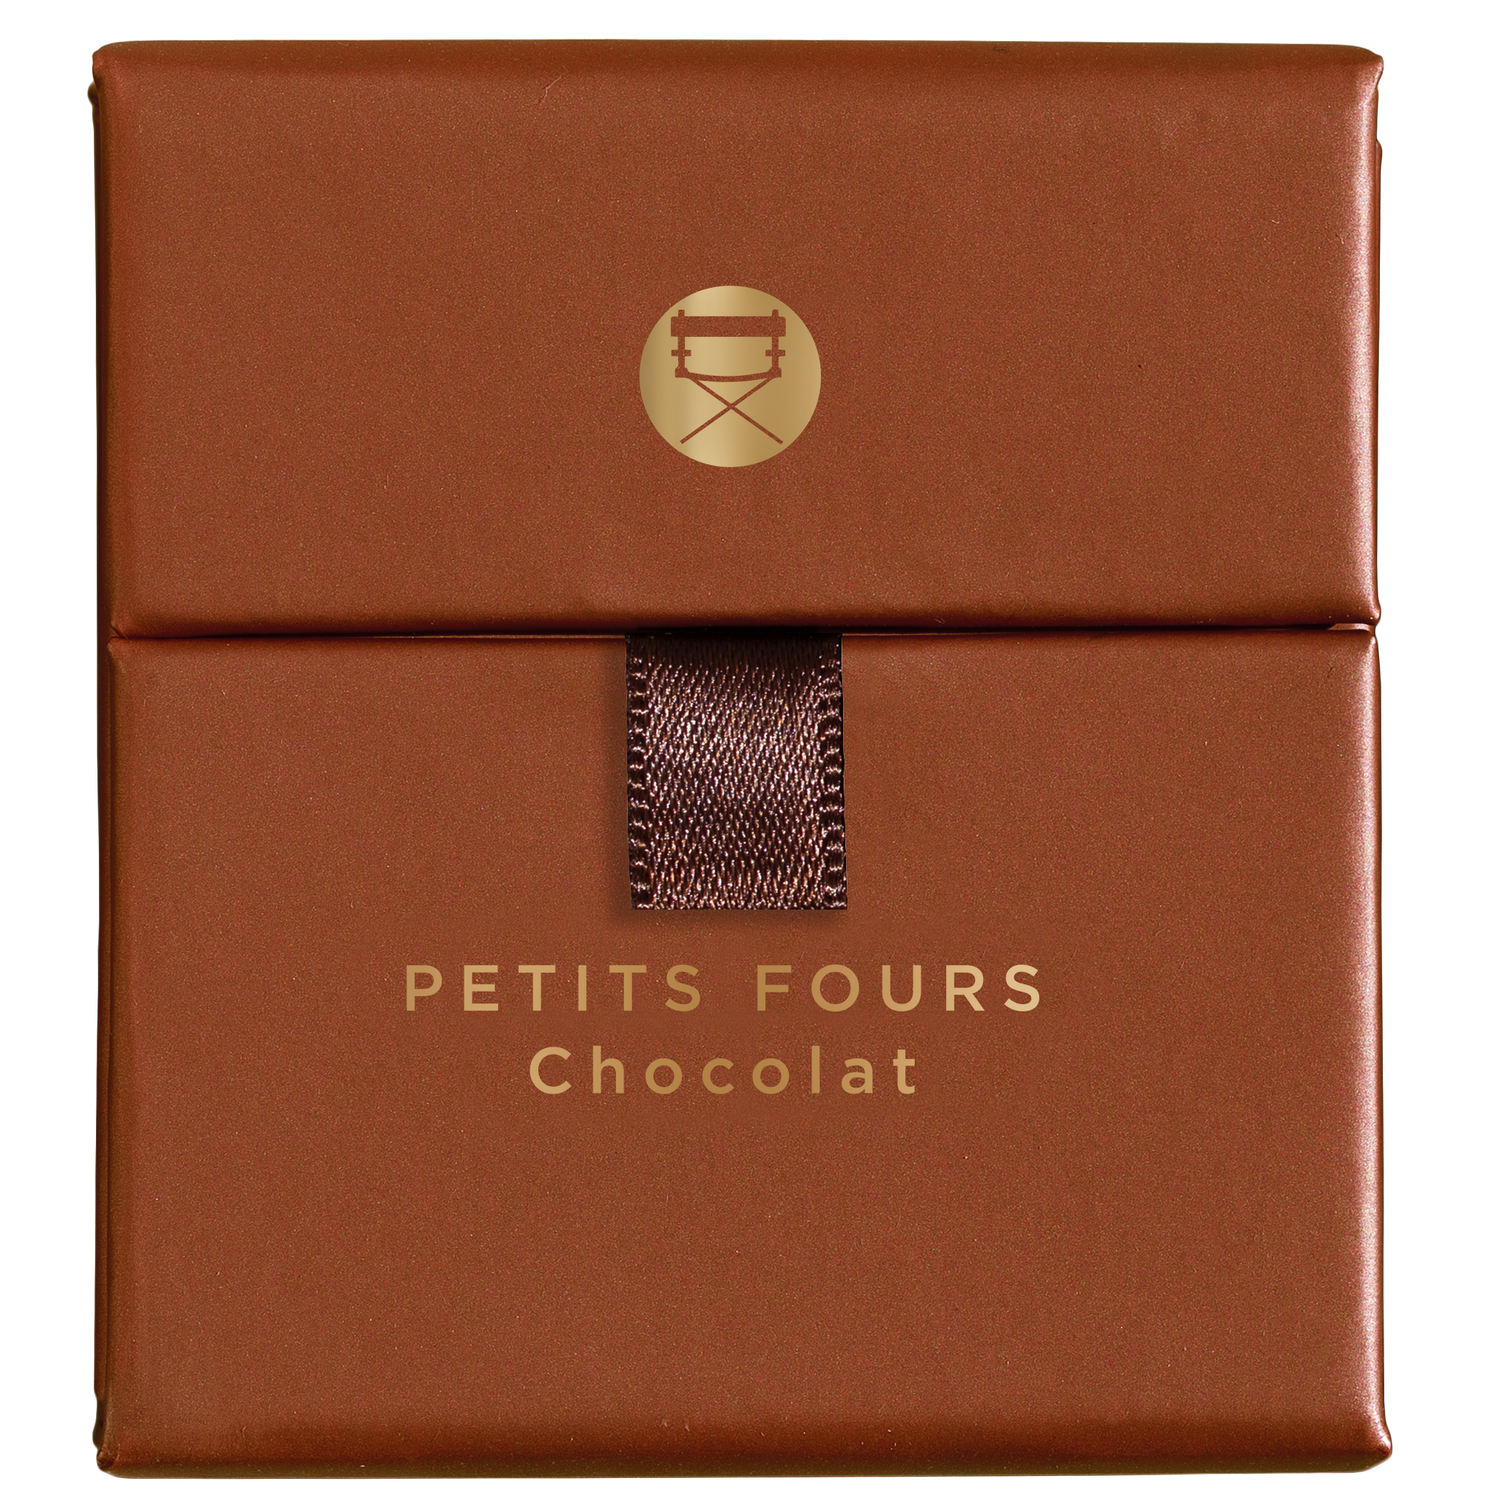 Viseart Paris Petits Fours Chocolat Eyeshadow Palette Case